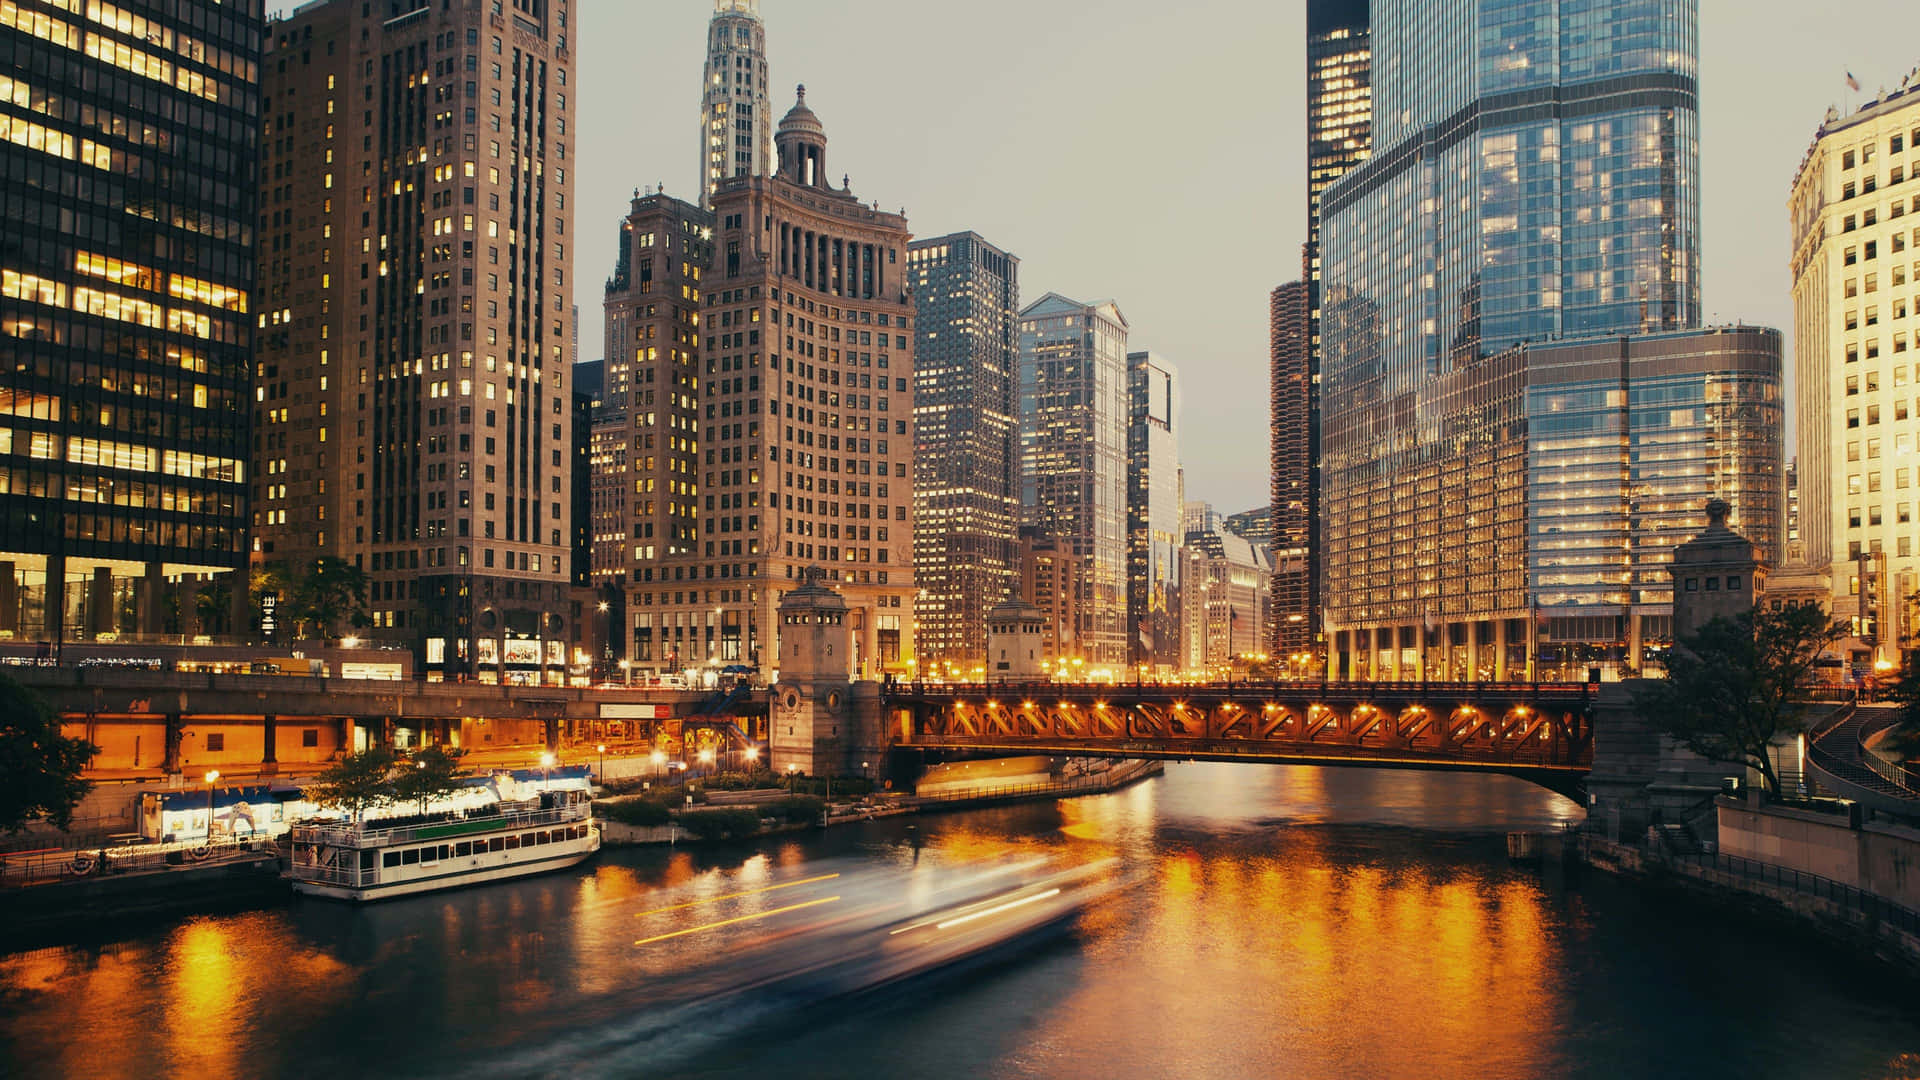 “Stunning Skyline View of Chicago”